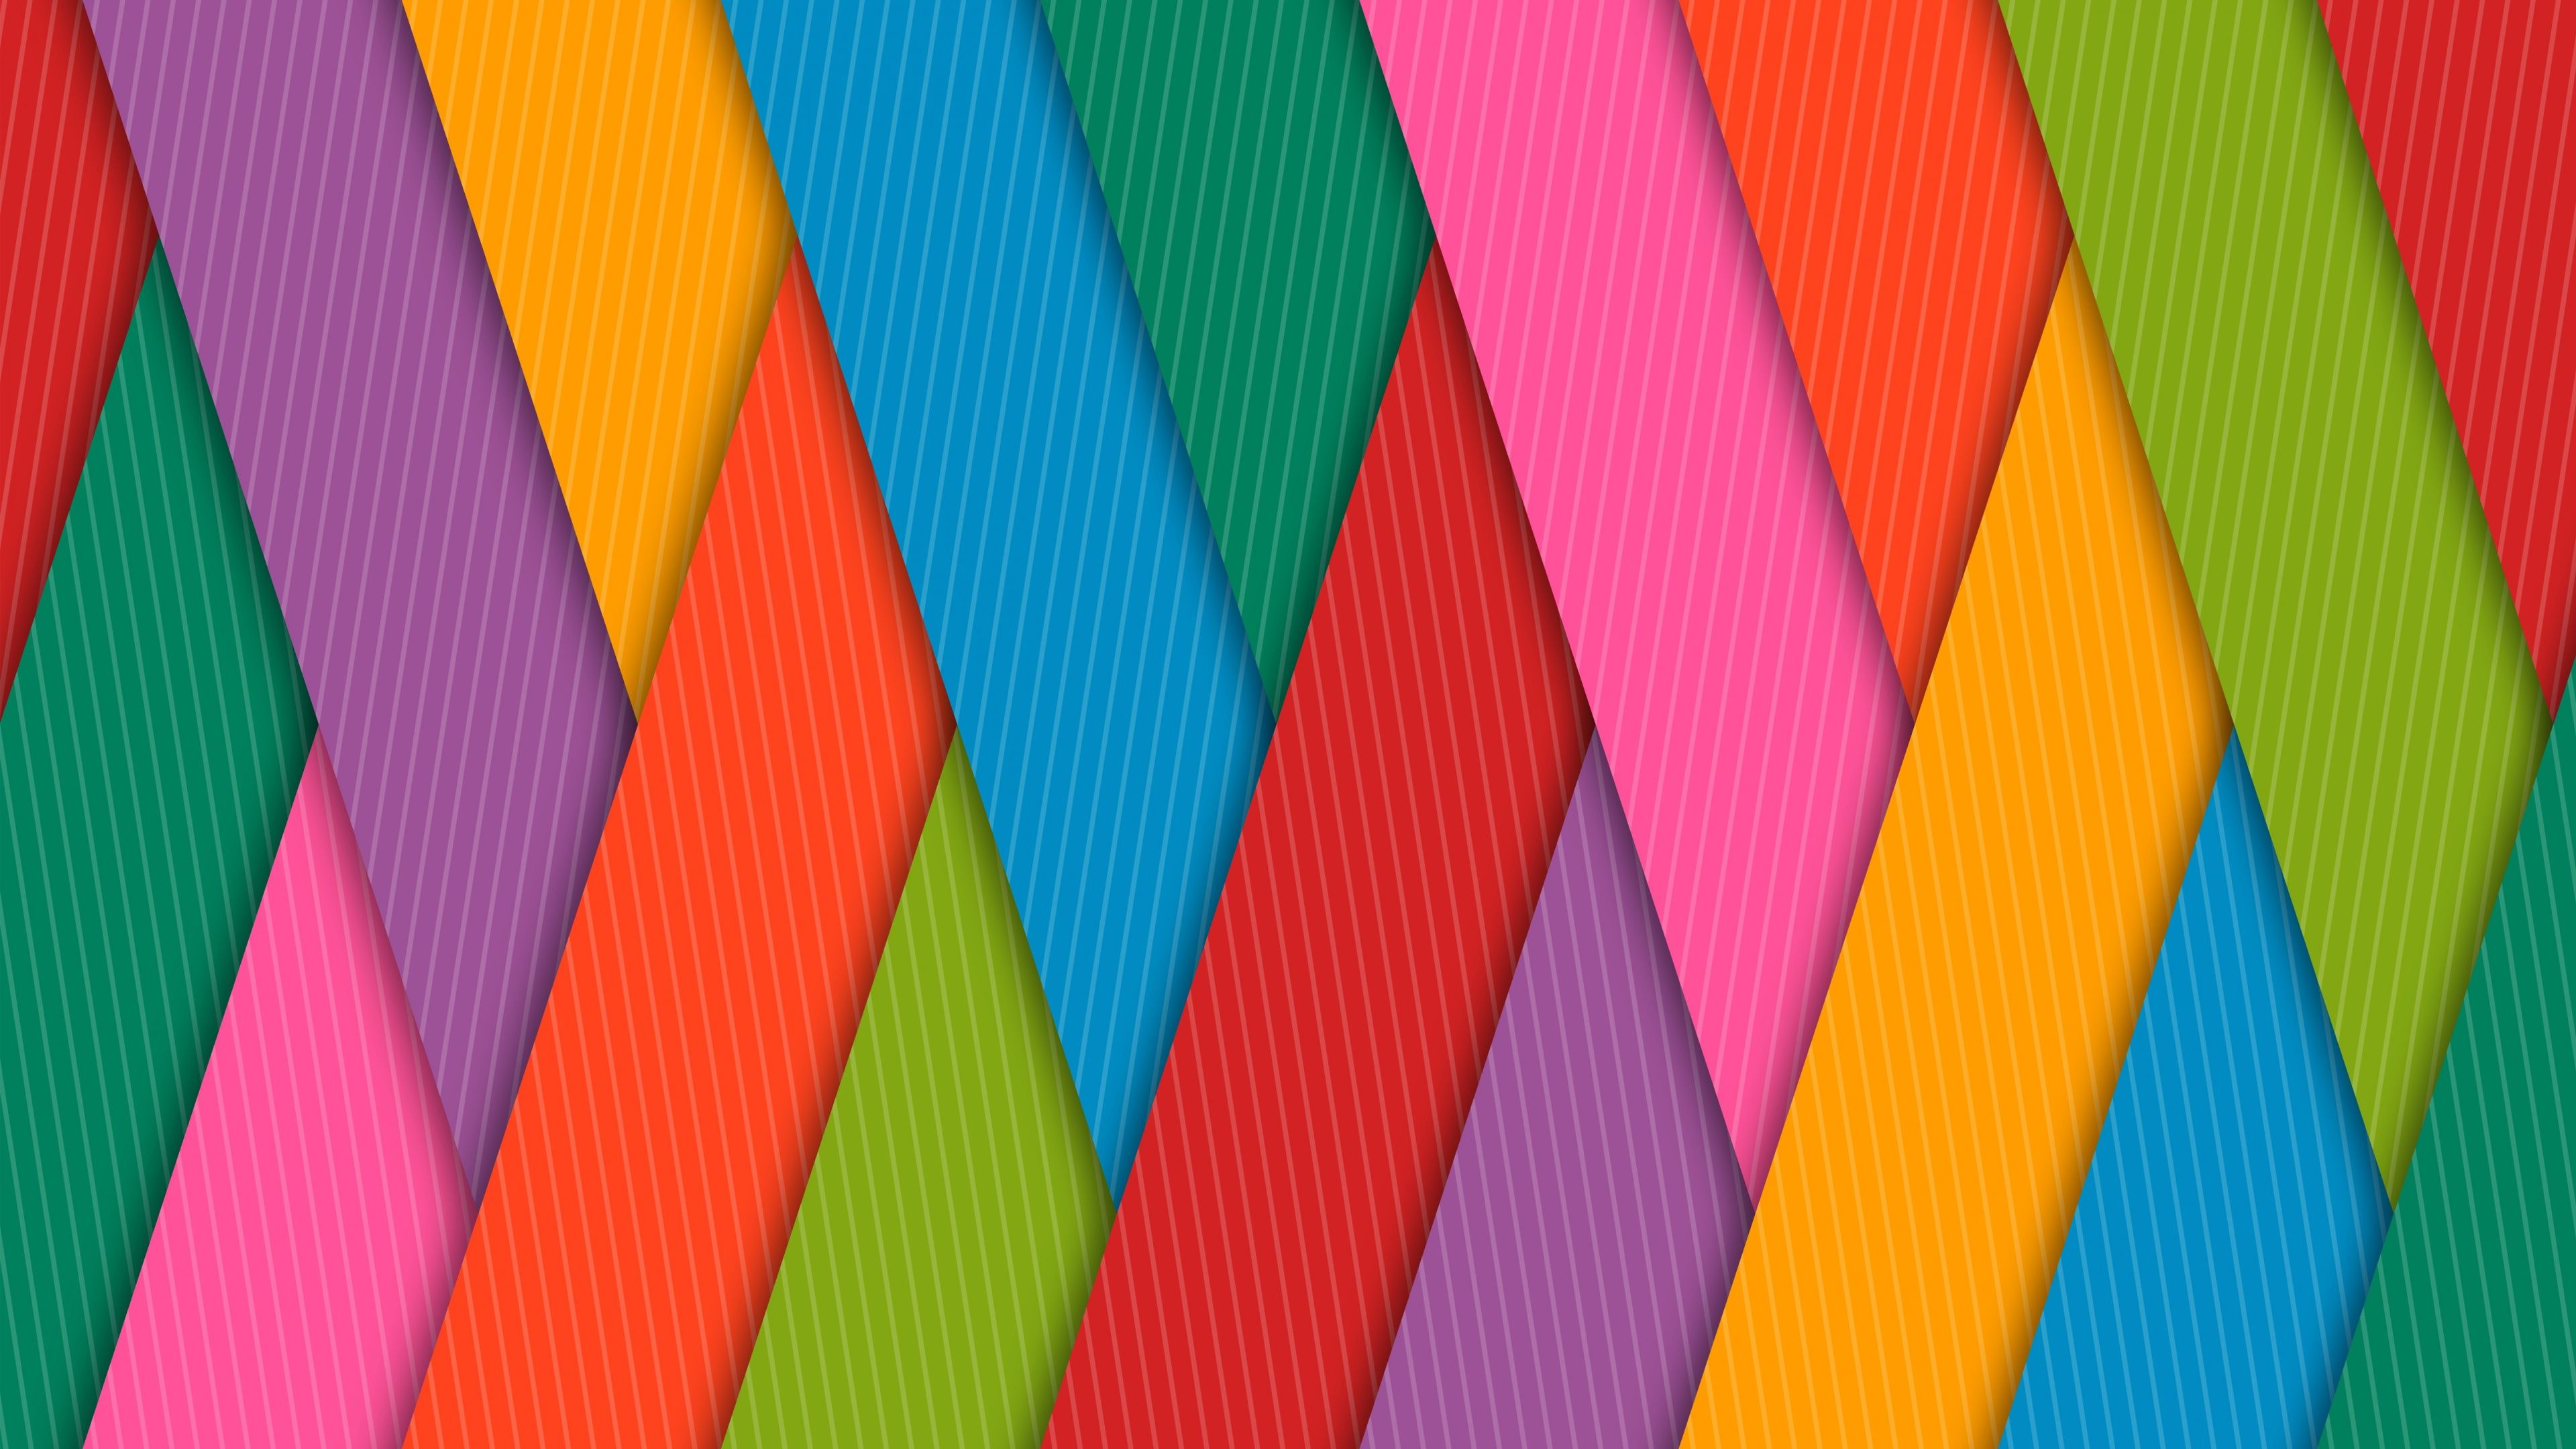 Colorful Strips 4K 5K Wallpaper in jpg format for free download